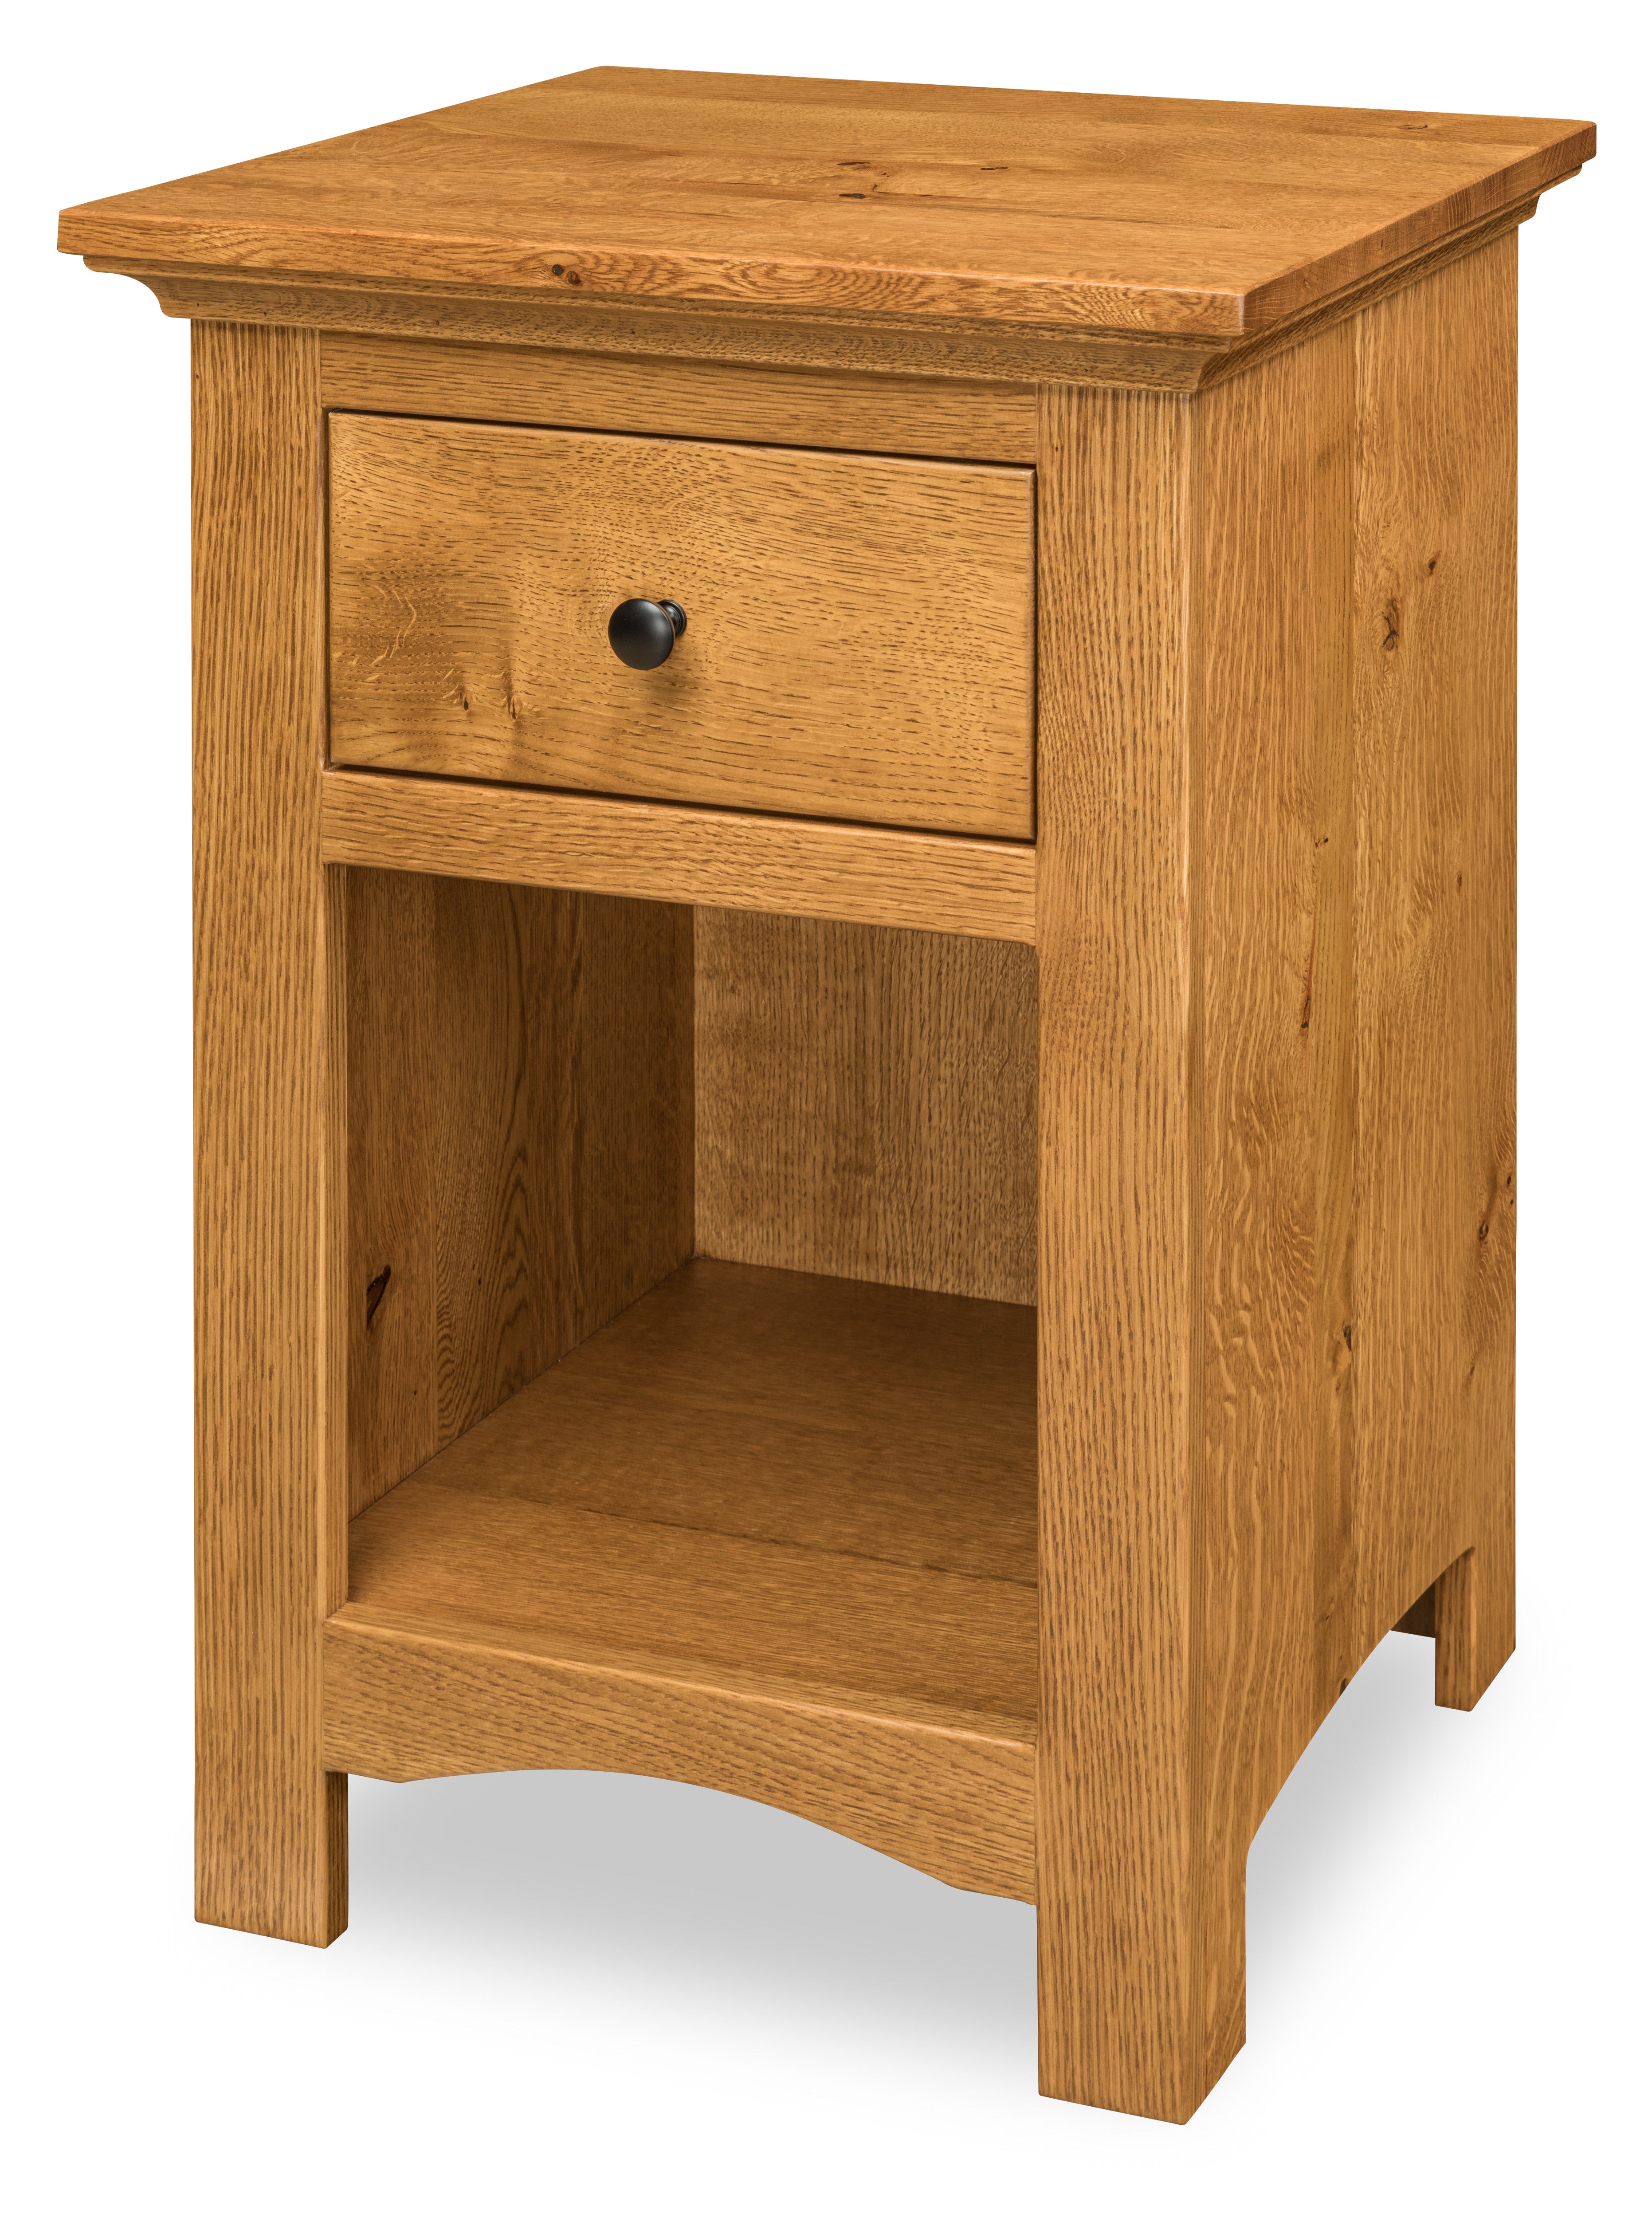 camden one drawer nightstand in rustic quartersawn wood with medium walnut stain